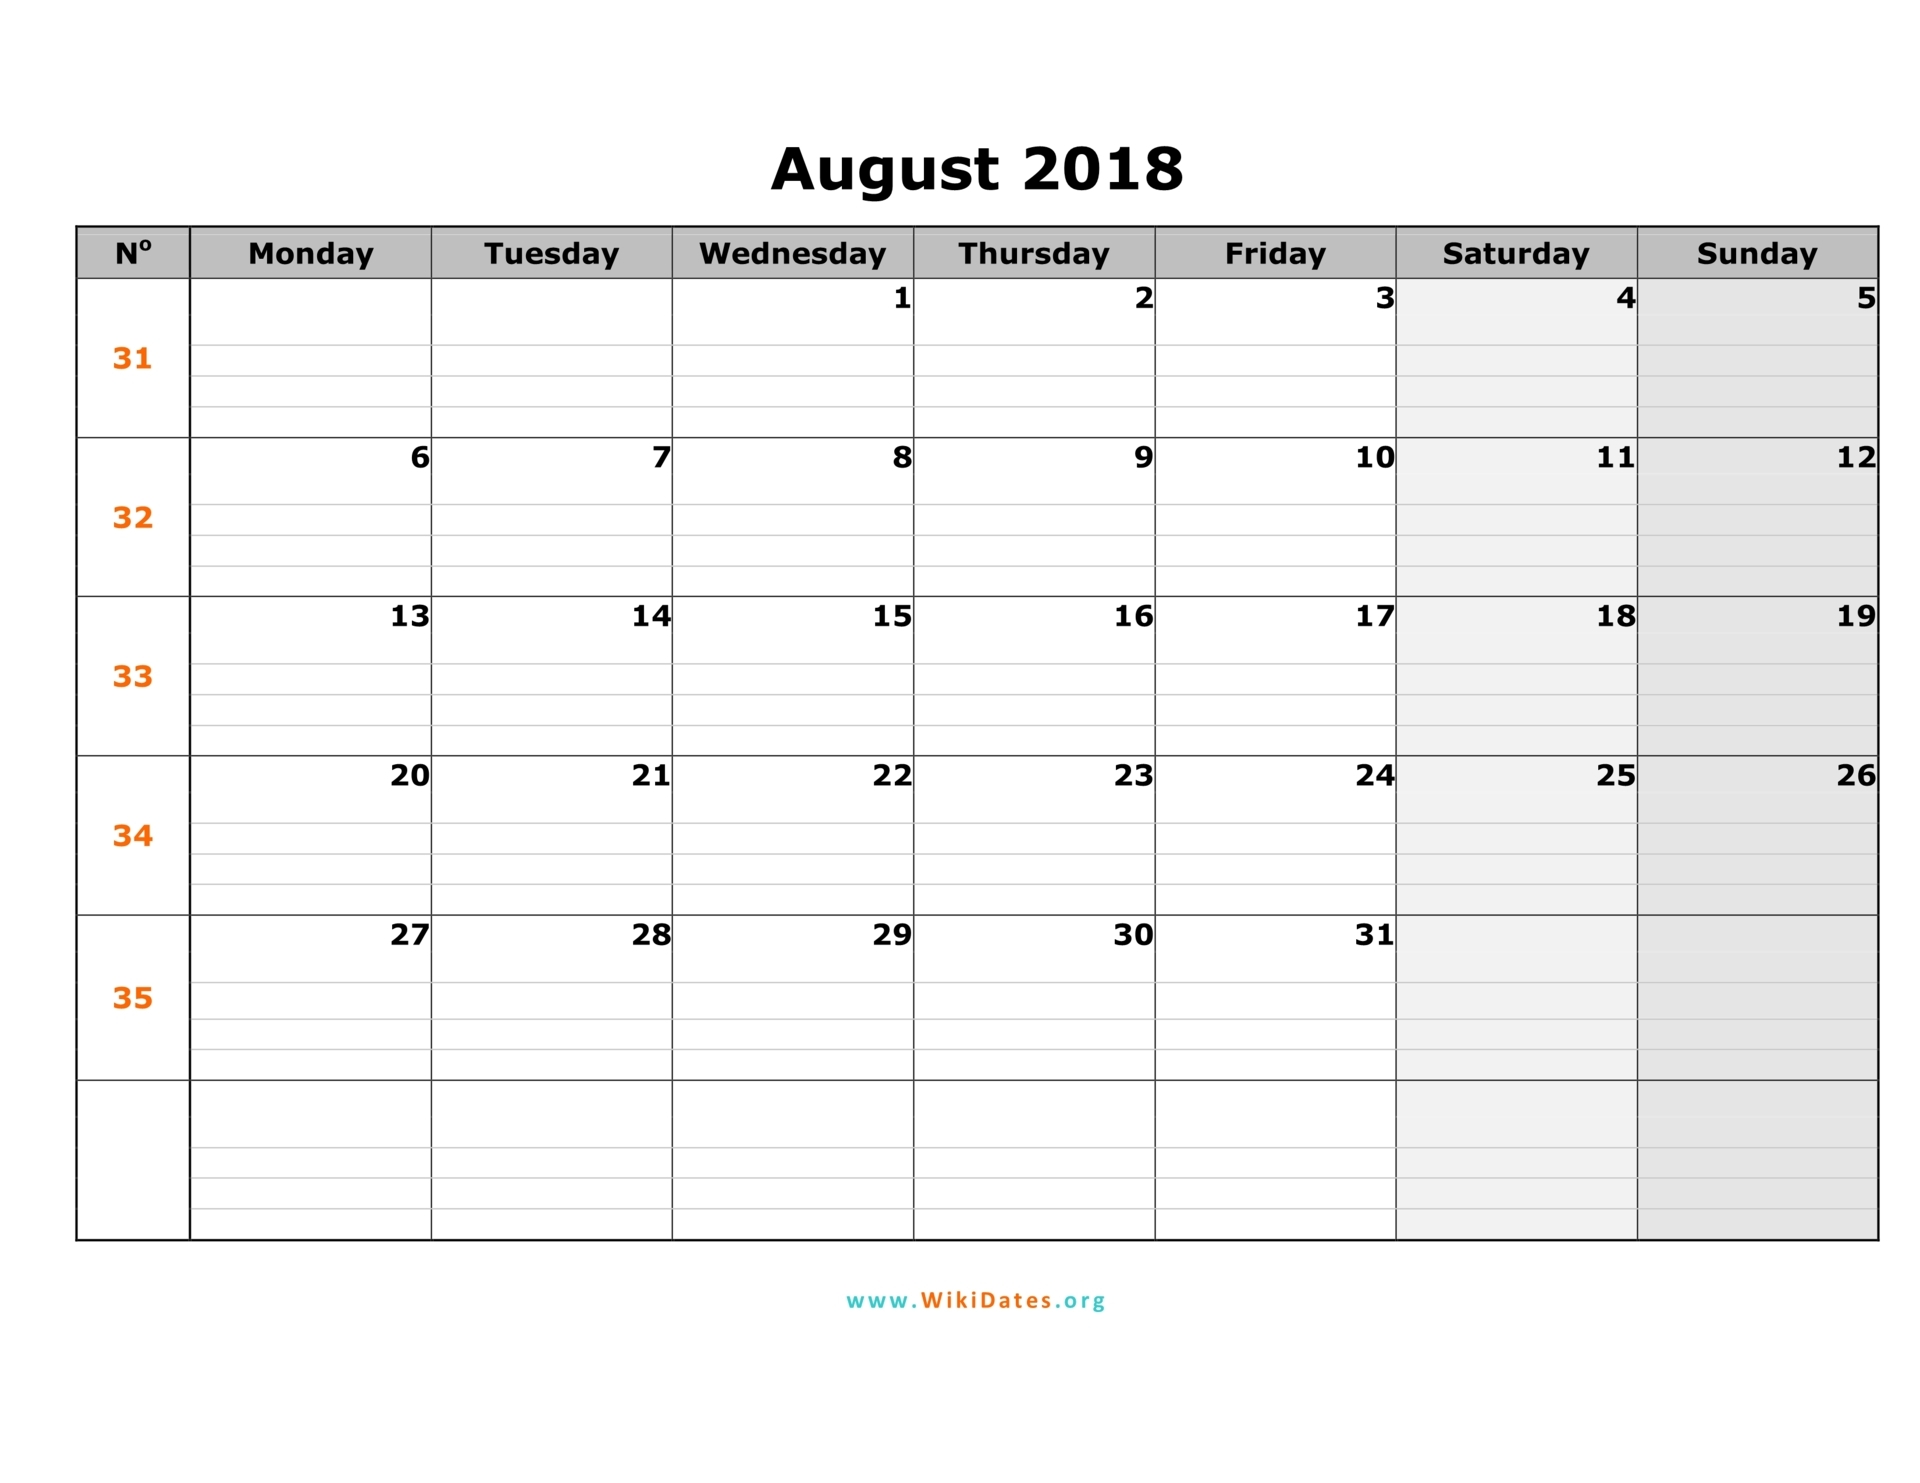 august-2018-calendar-wikidates